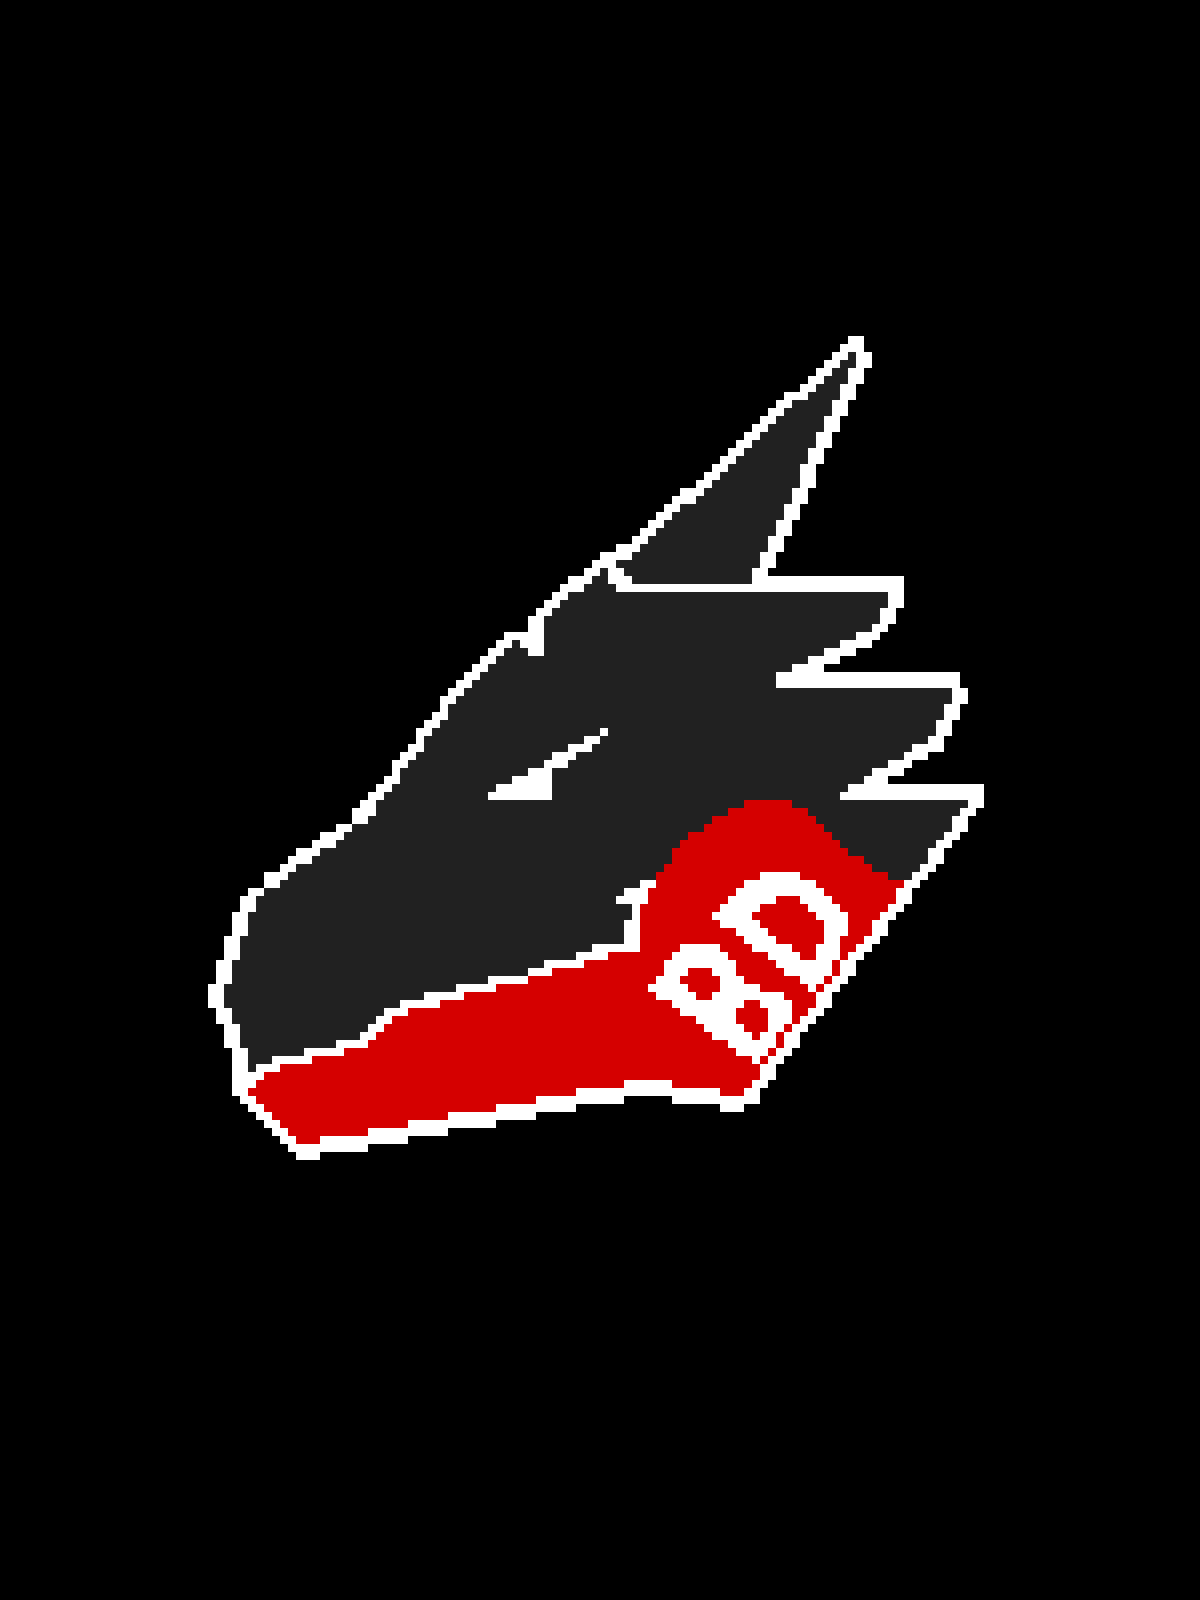 cory weigel share bad dragon logo photos